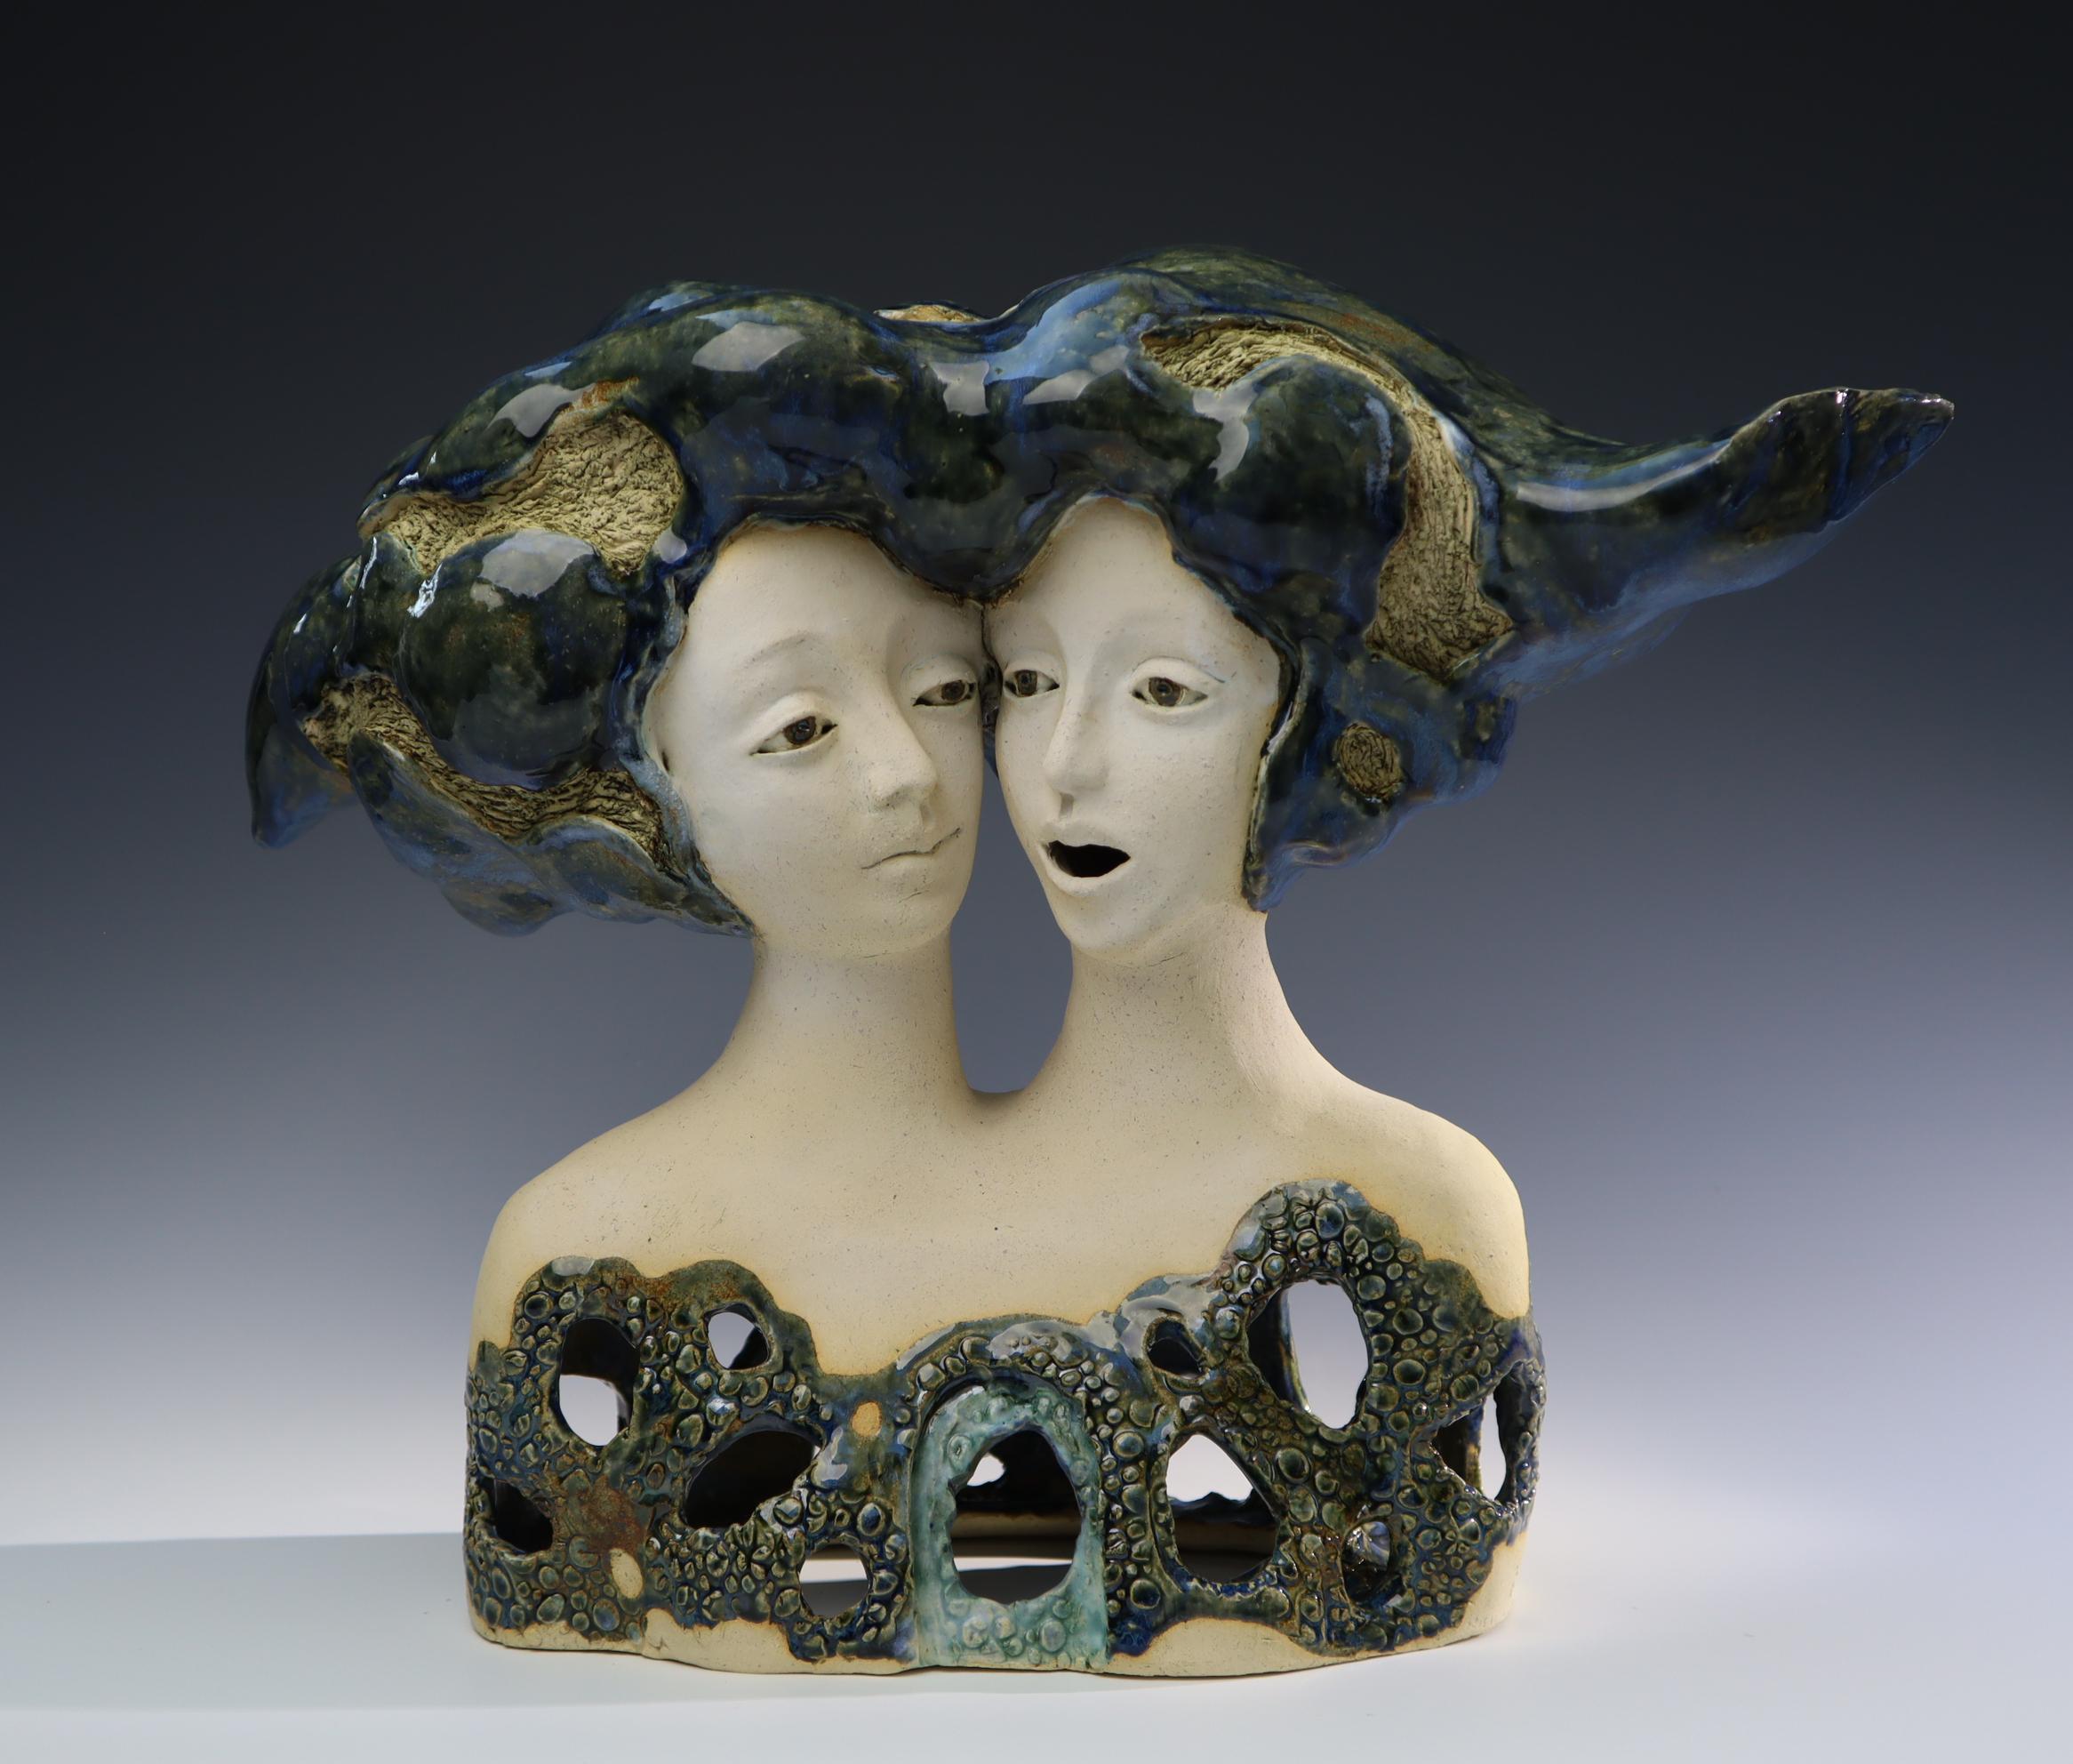 Natasha Dikareva Figurative Sculpture - "Listen Europe", contemporary, stoneware, figures, blue, sculpture